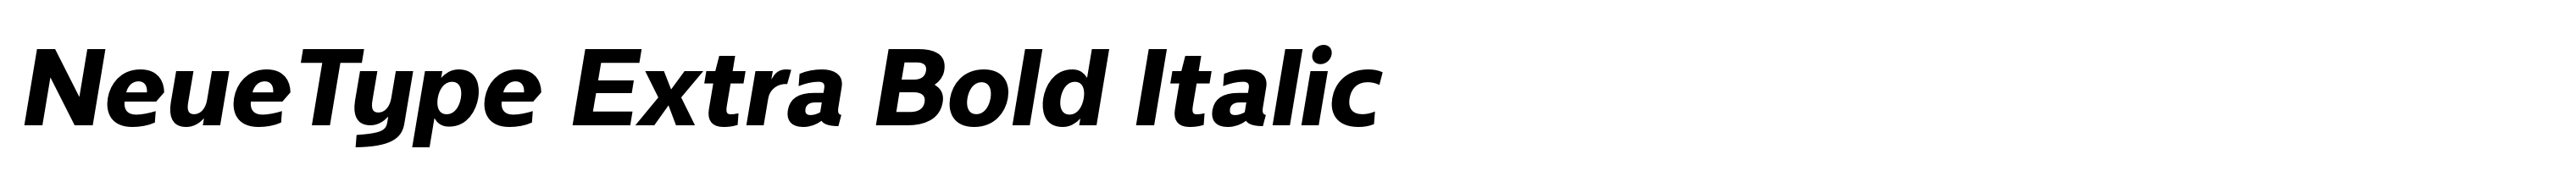 NeueType Extra Bold Italic